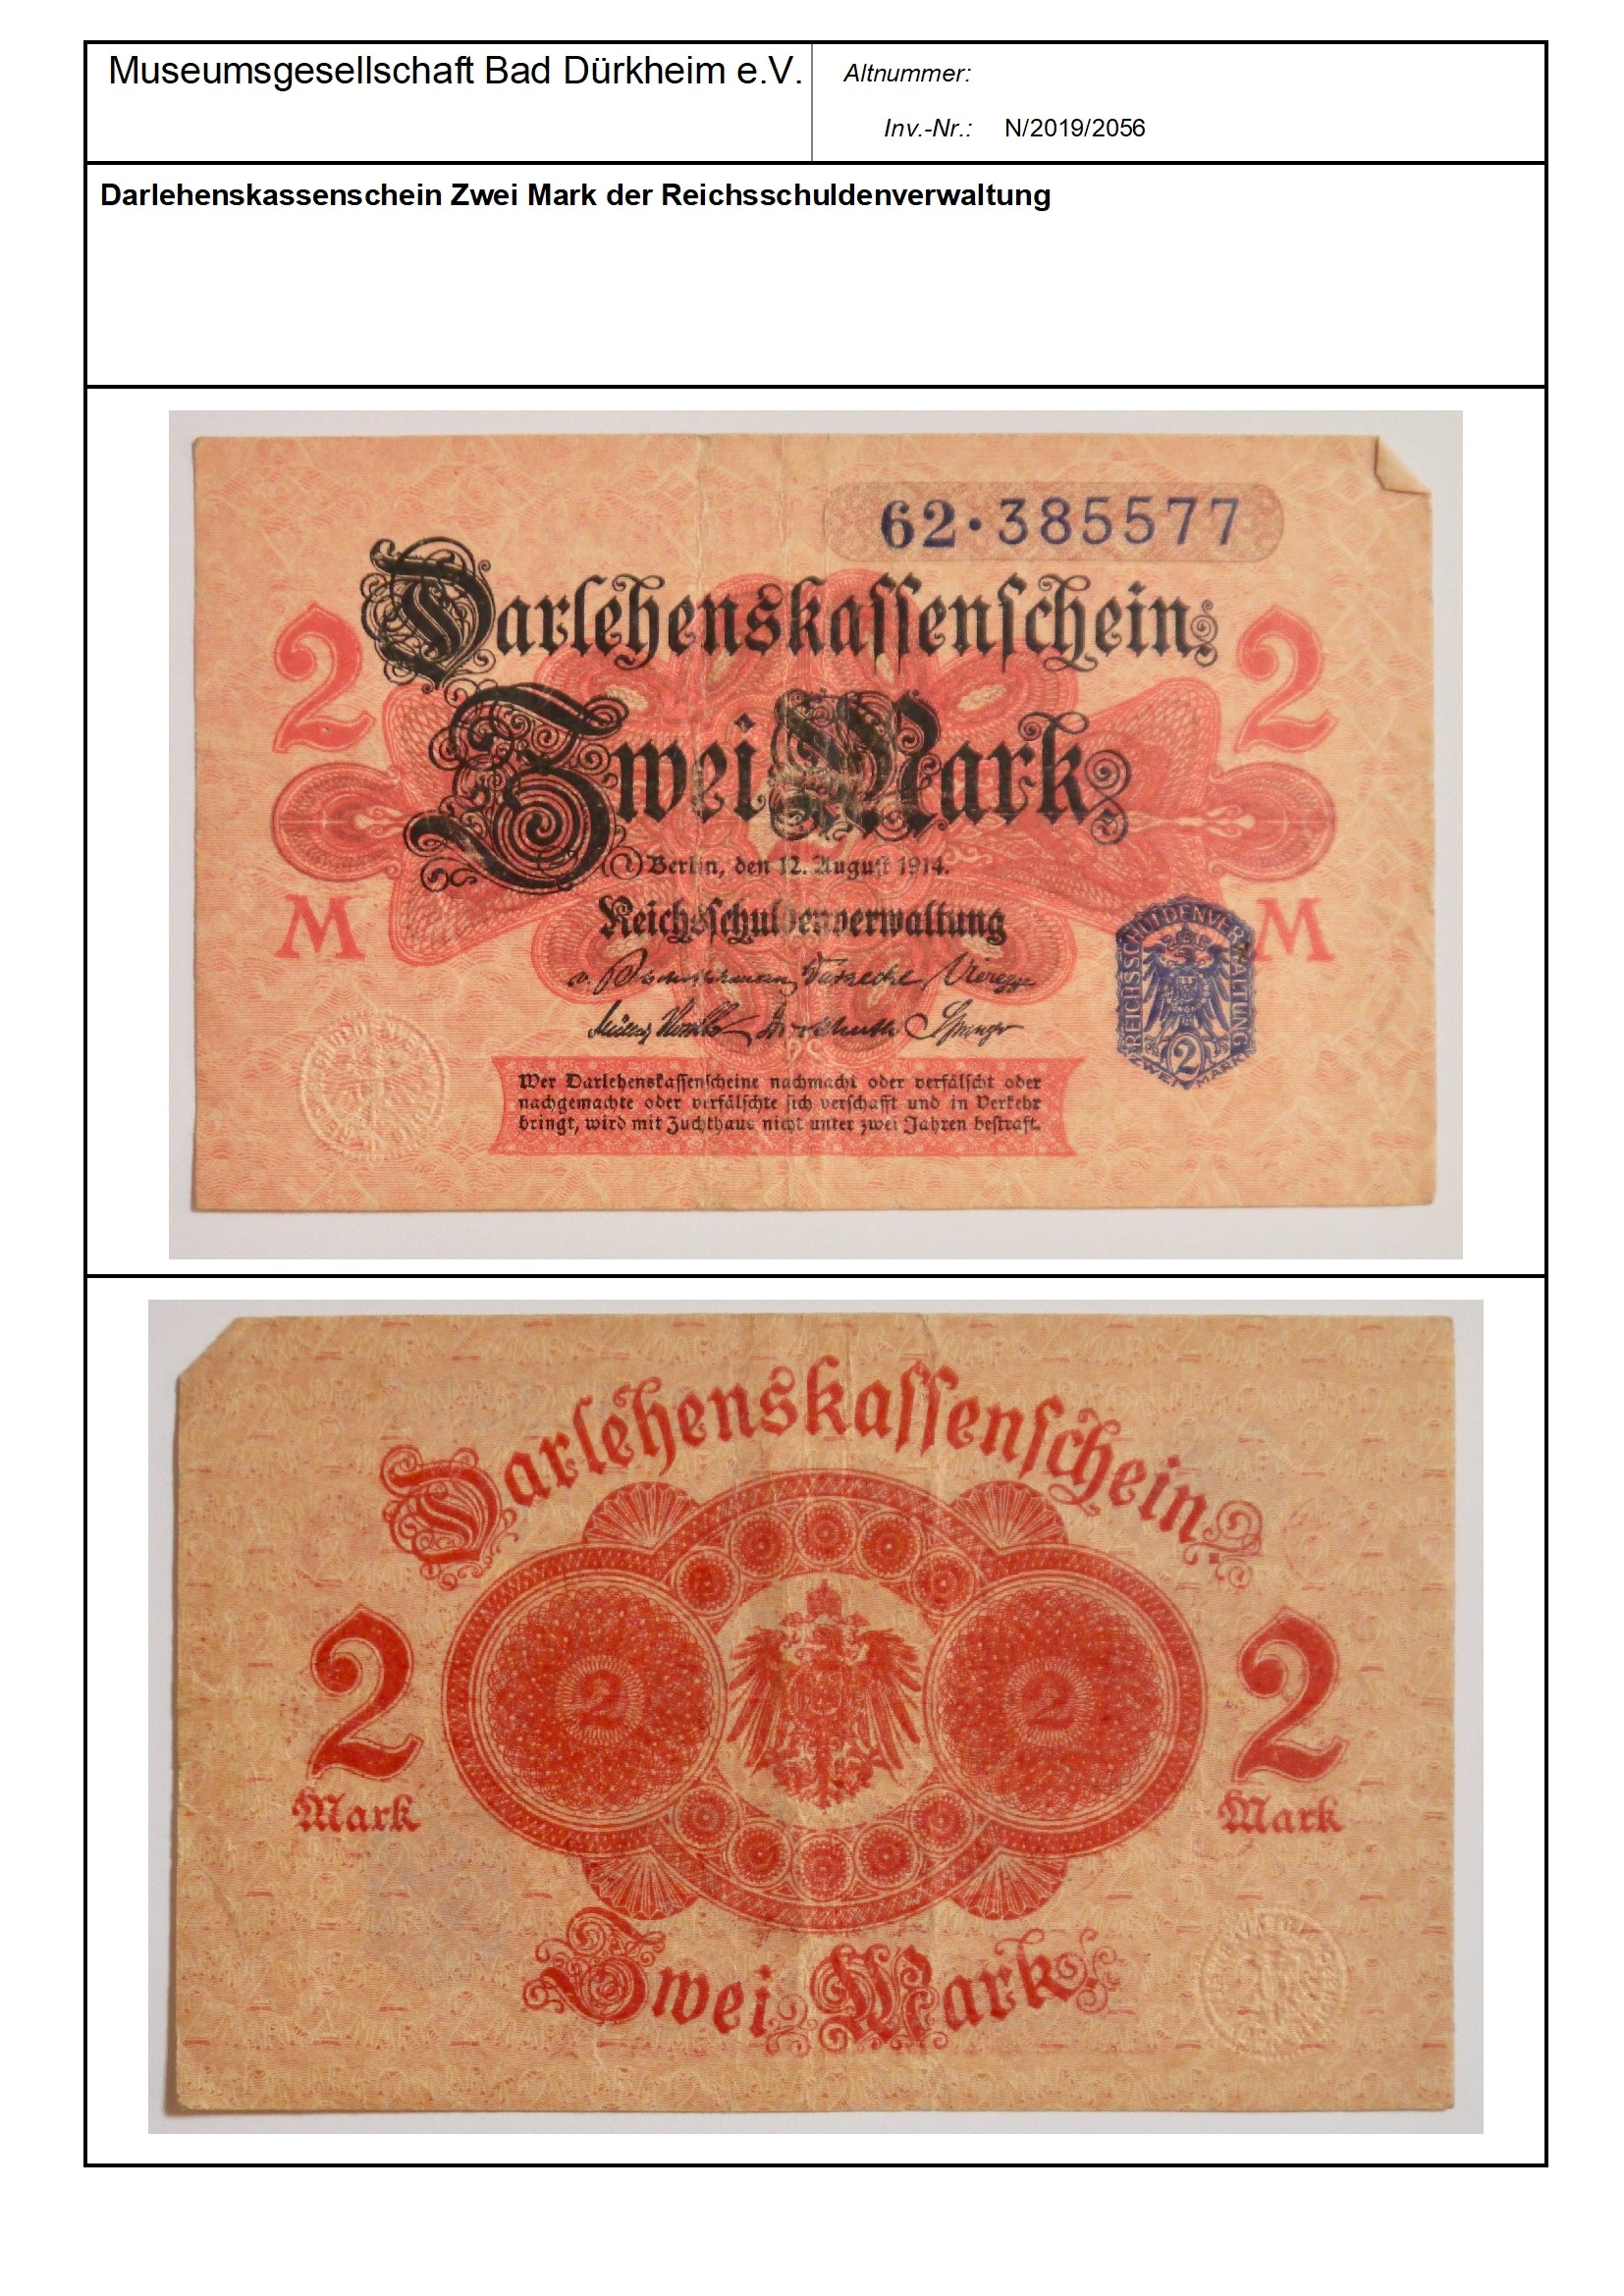 Darlehnskassenschein Zwei Mark der Reichsschuldenverwaltung
Serien-Nummer: 62*385577 (Museumsgesellschaft Bad Dürkheim e.V. CC BY-NC-SA)